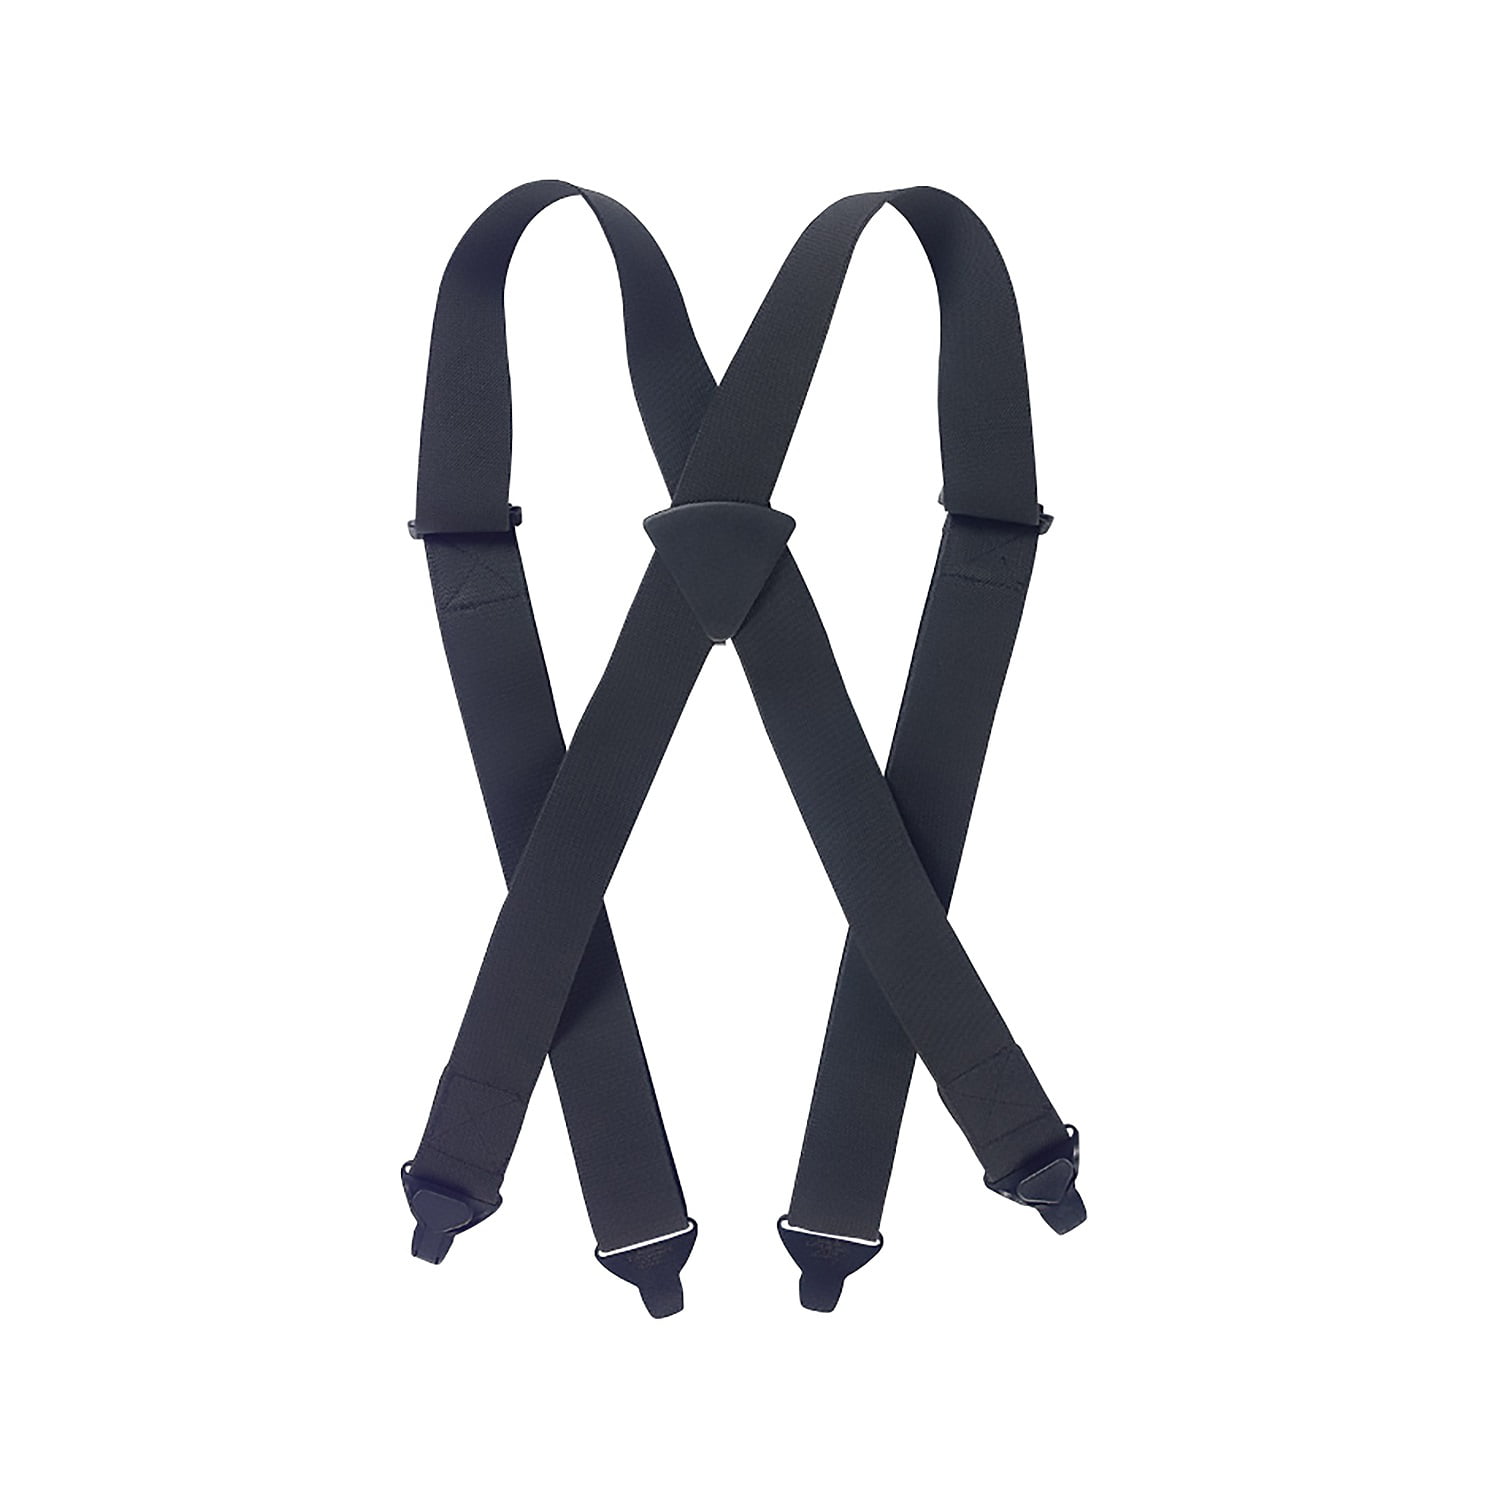 Chums Suspenders - Walmart.com